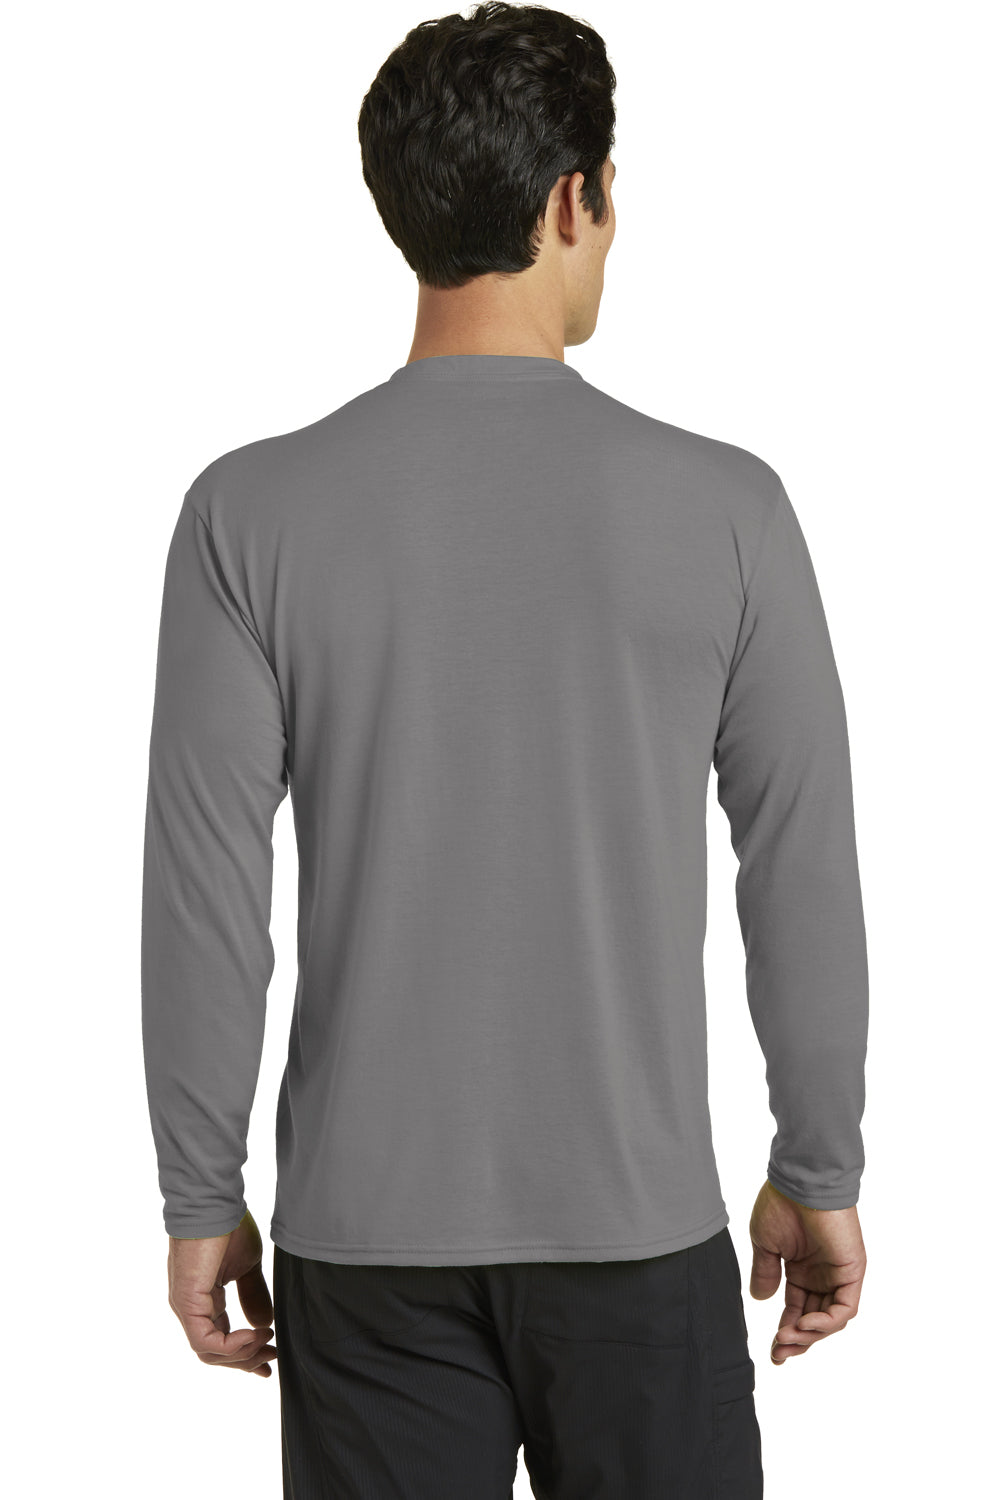 Port & Company PC381LS Mens Dry Zone Performance Moisture Wicking Long Sleeve Crewneck T-Shirt Medium Grey Back